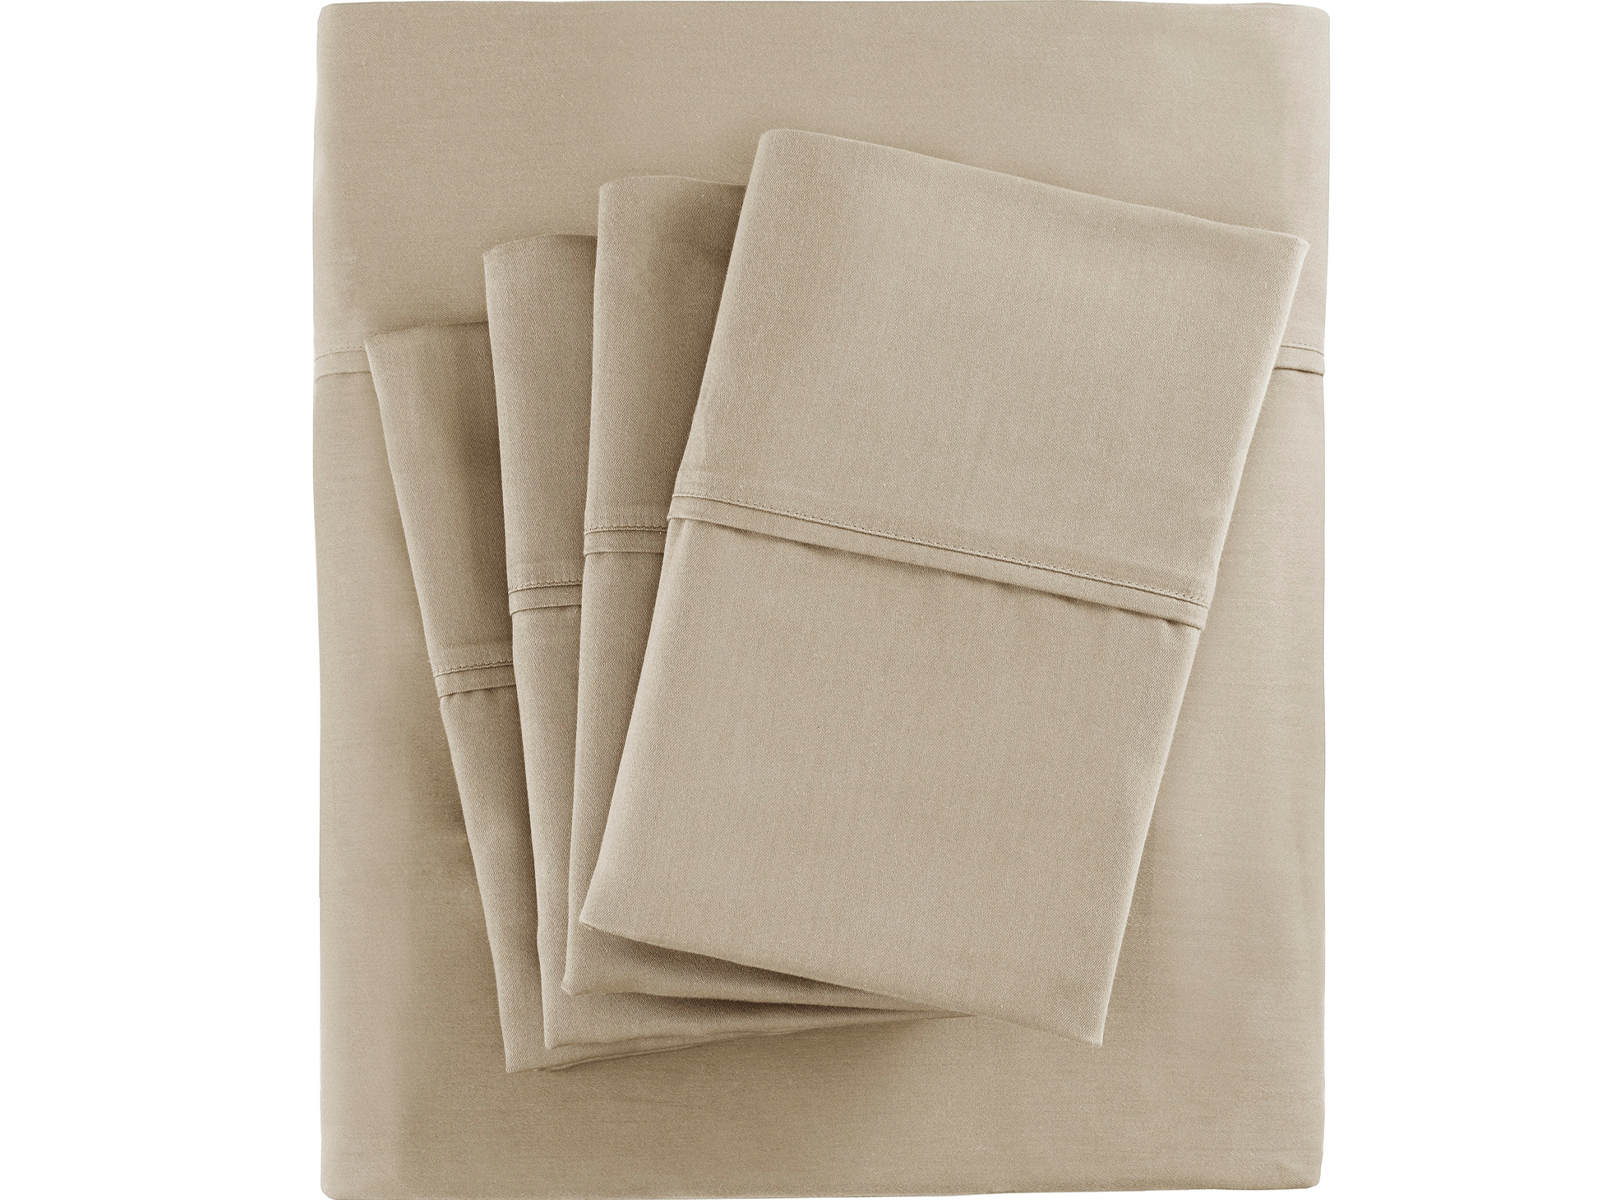 Madison Park Split King 800 Thread Count Cotton Sateen Sheet Set | Khaki